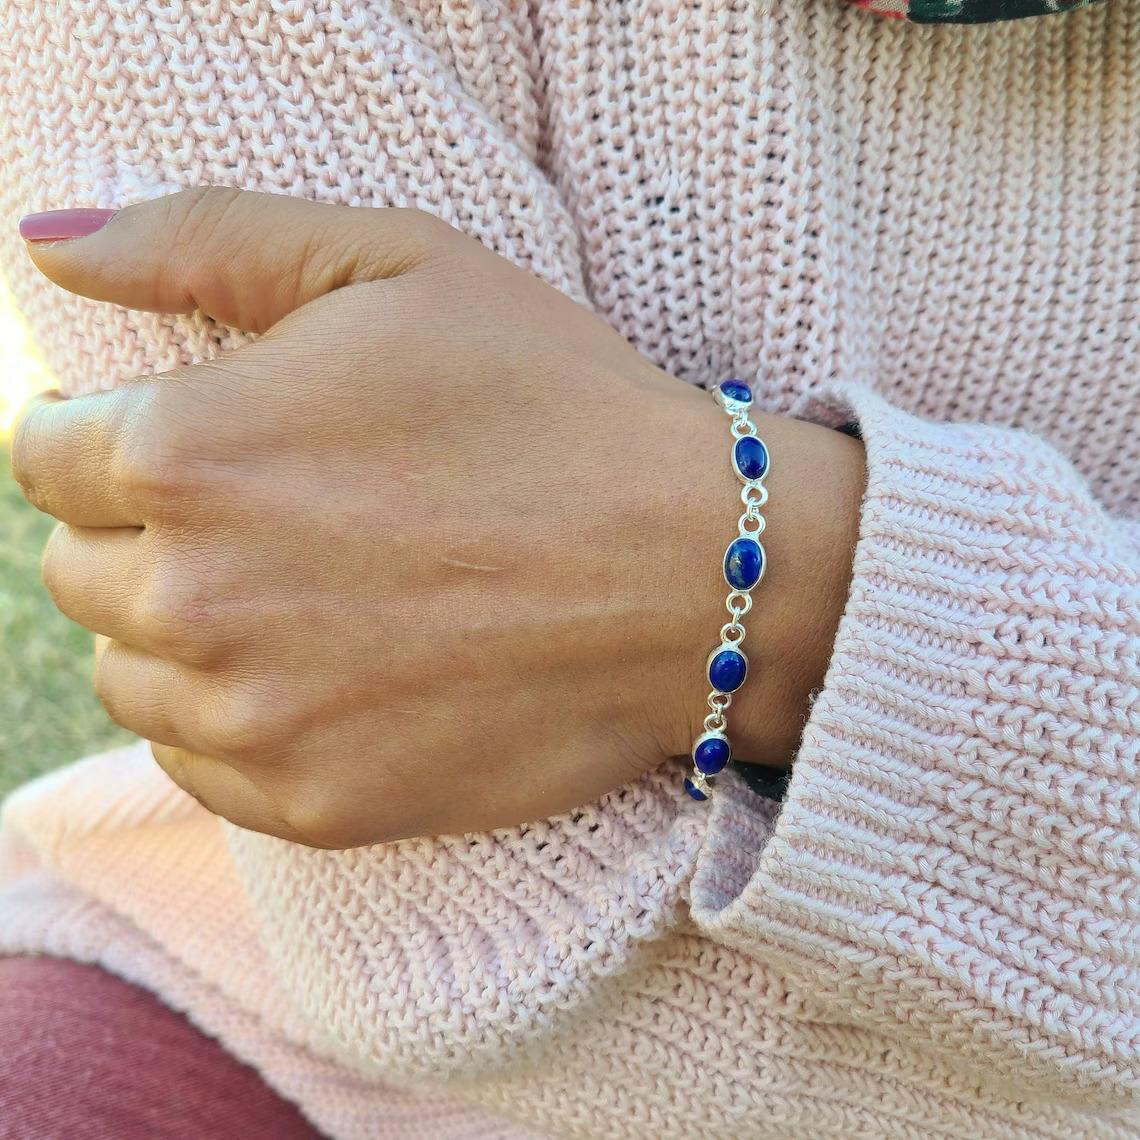 lapis lazuli silver bracelet on the woman's wrist